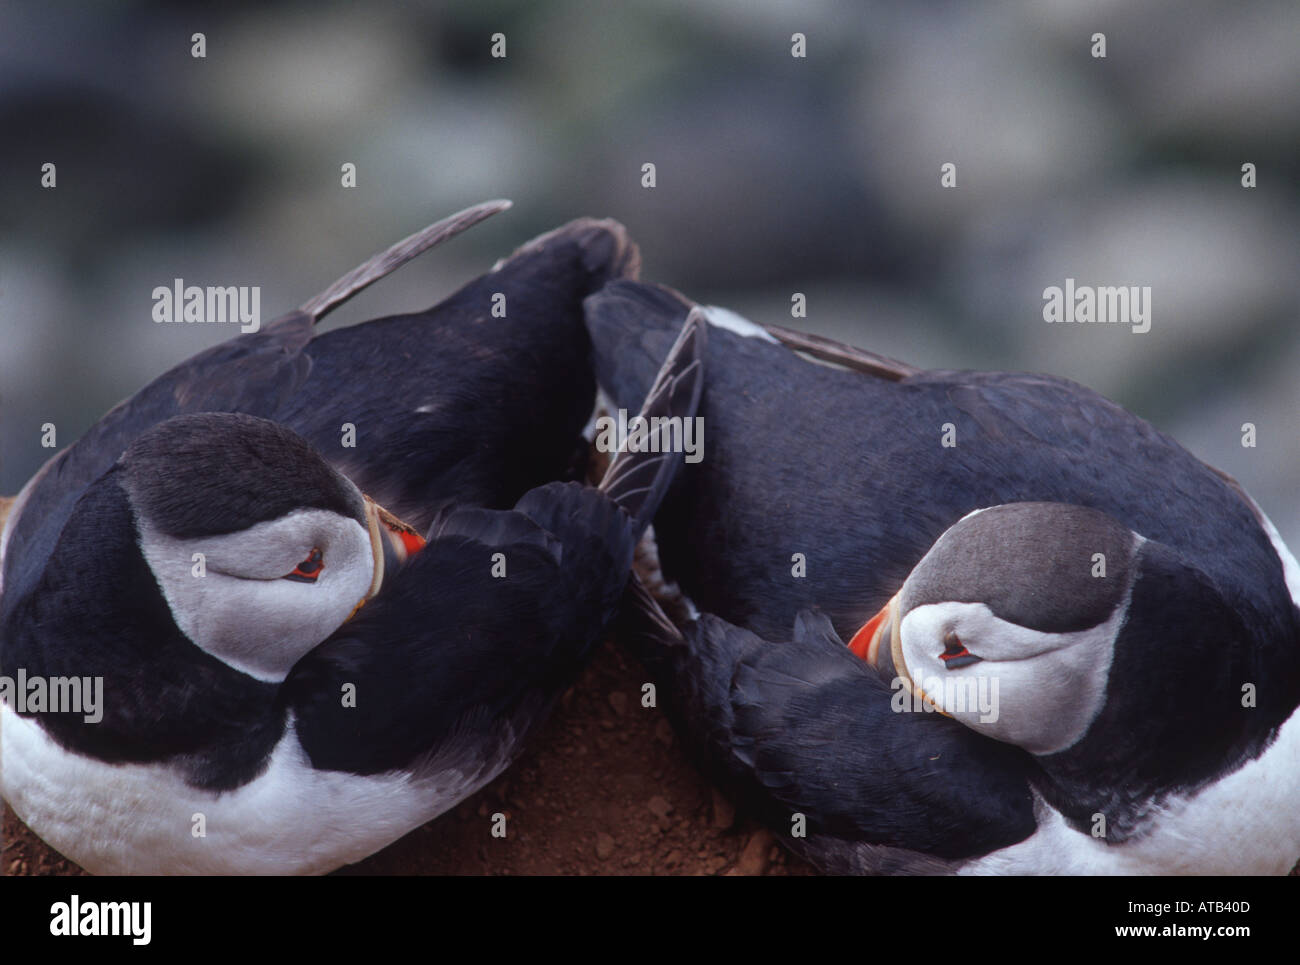 Atlantic puffins sleeping bills tucked under wings Stock Photo